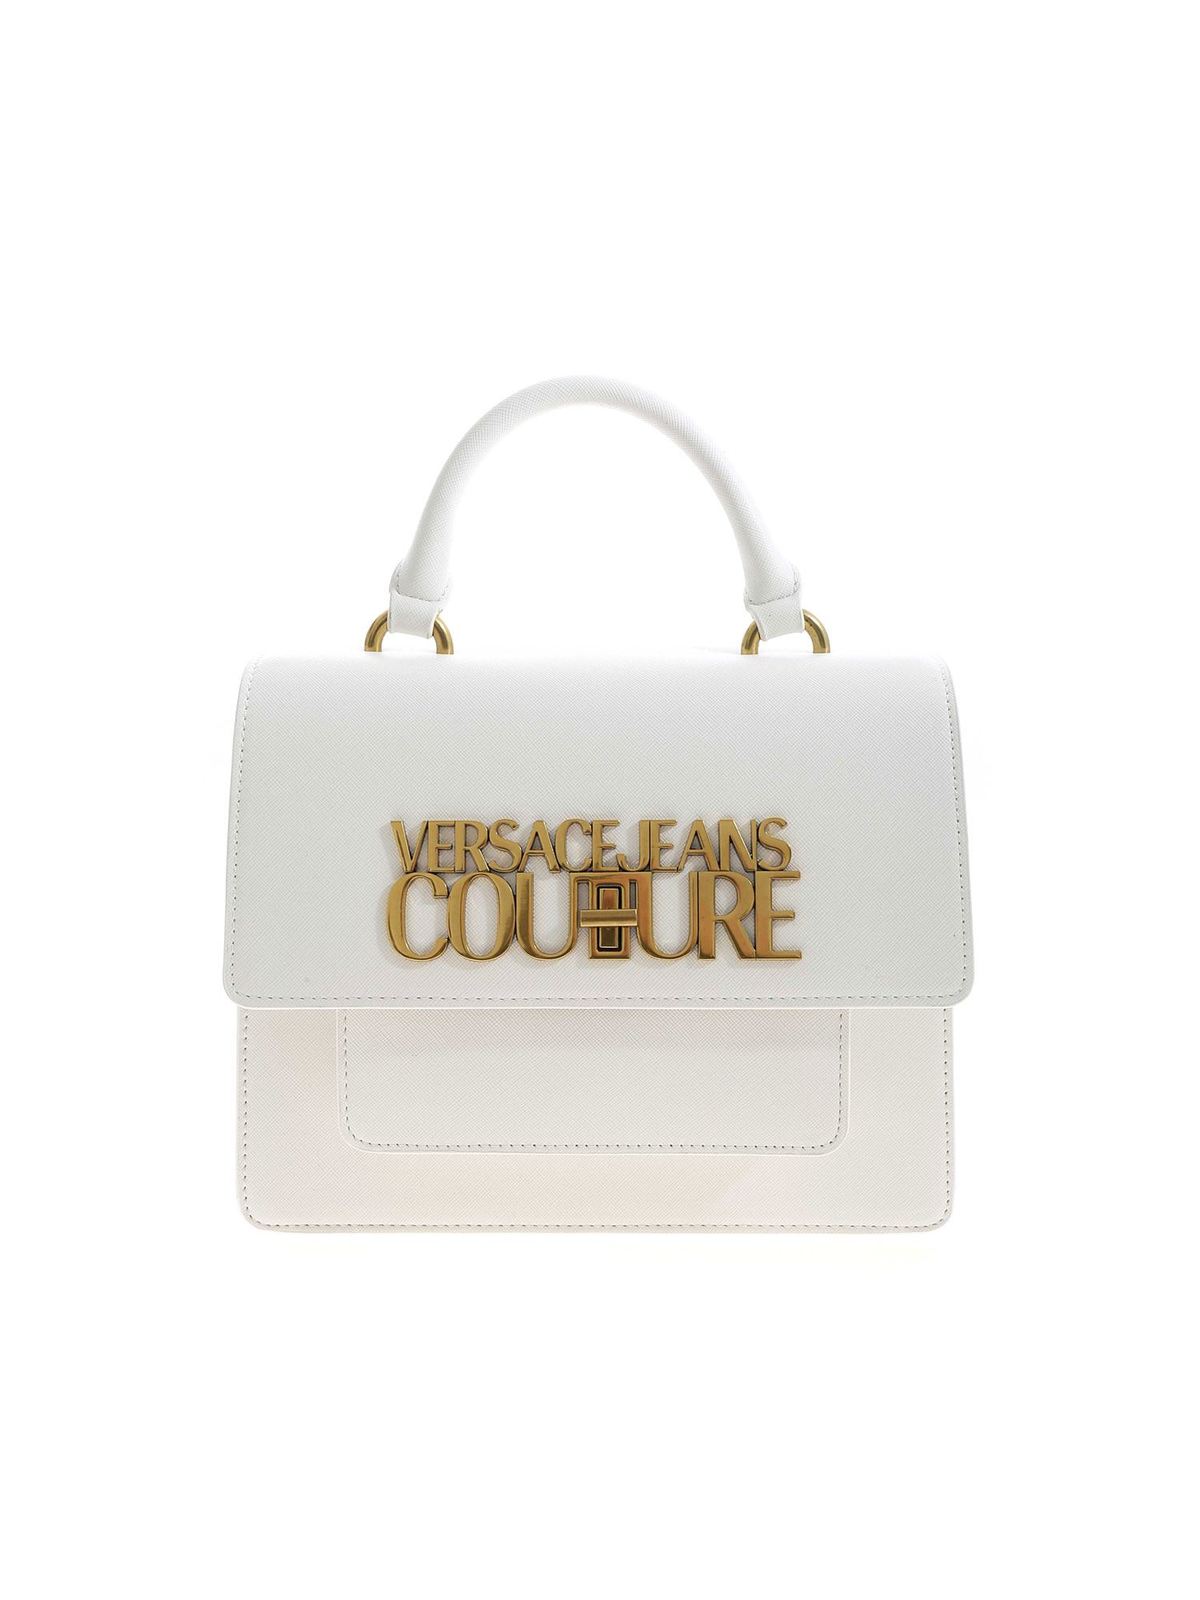 Totes bags Versace Jeans Couture - Logo handbag in white - E1VWABL571879003